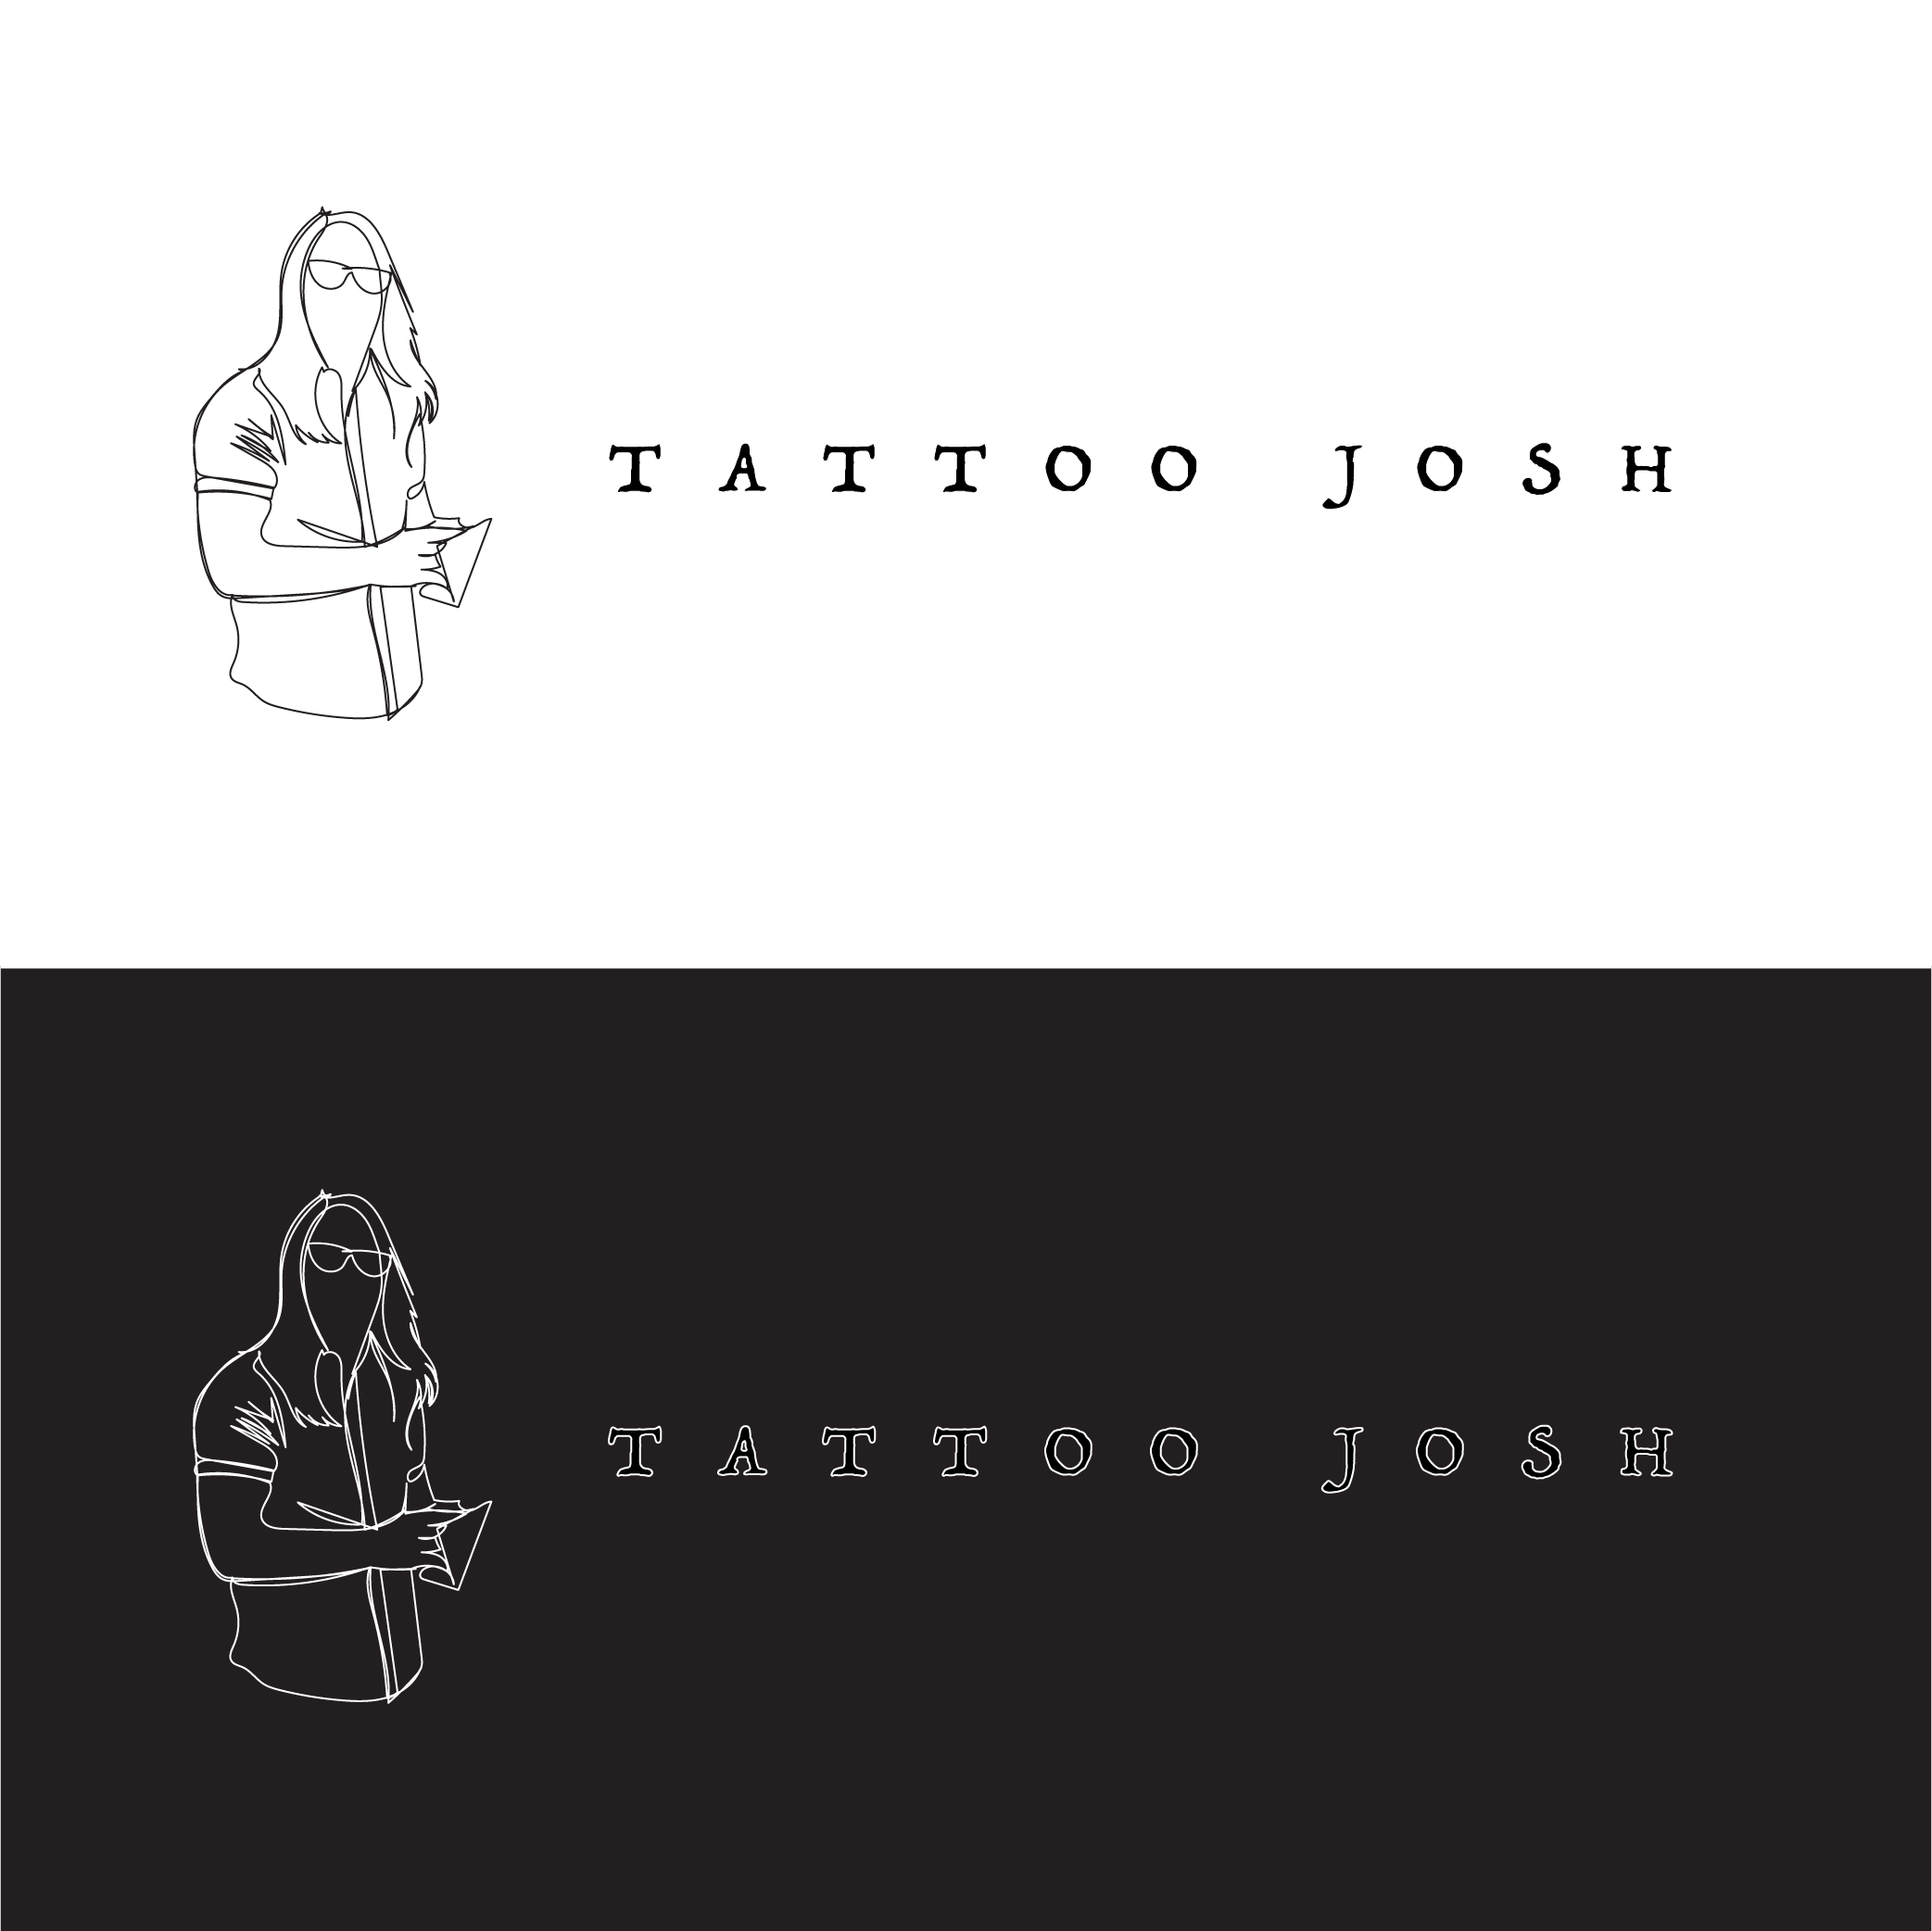 steven cote graphic design logo branding visual communication tattoo josh